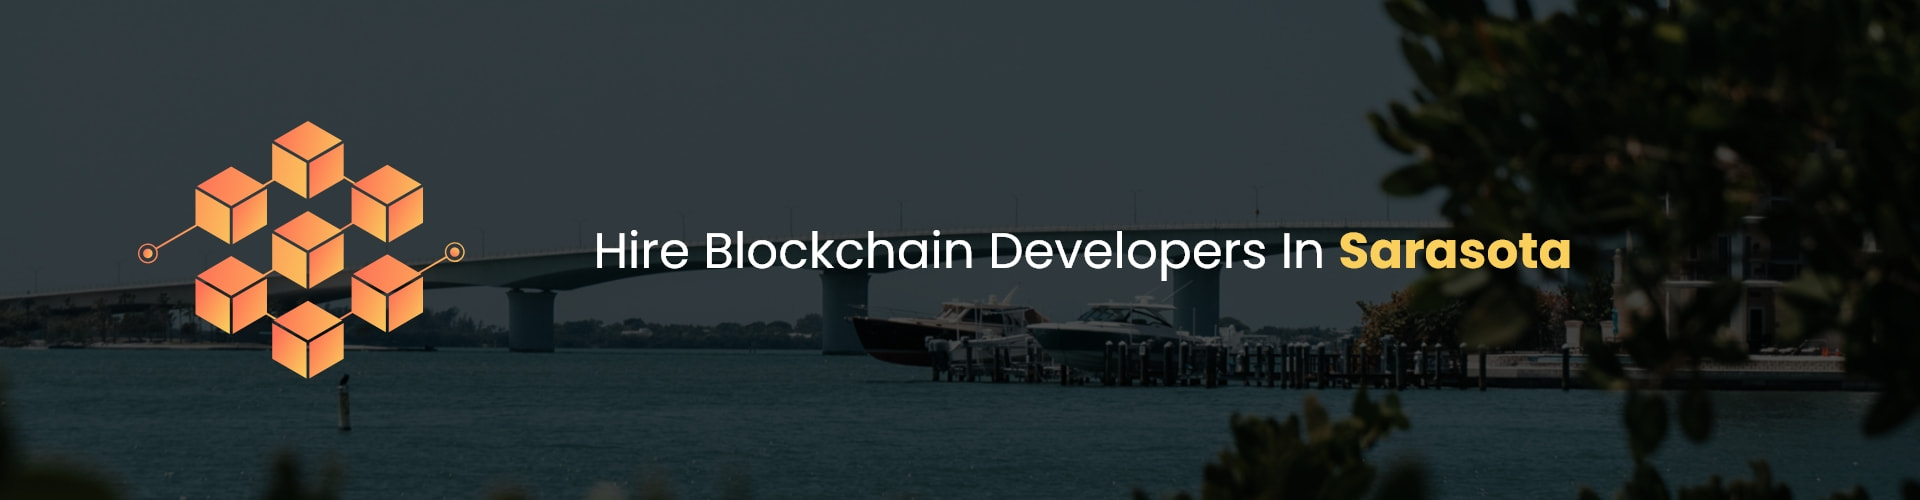 hire blockchain developers in sarasota